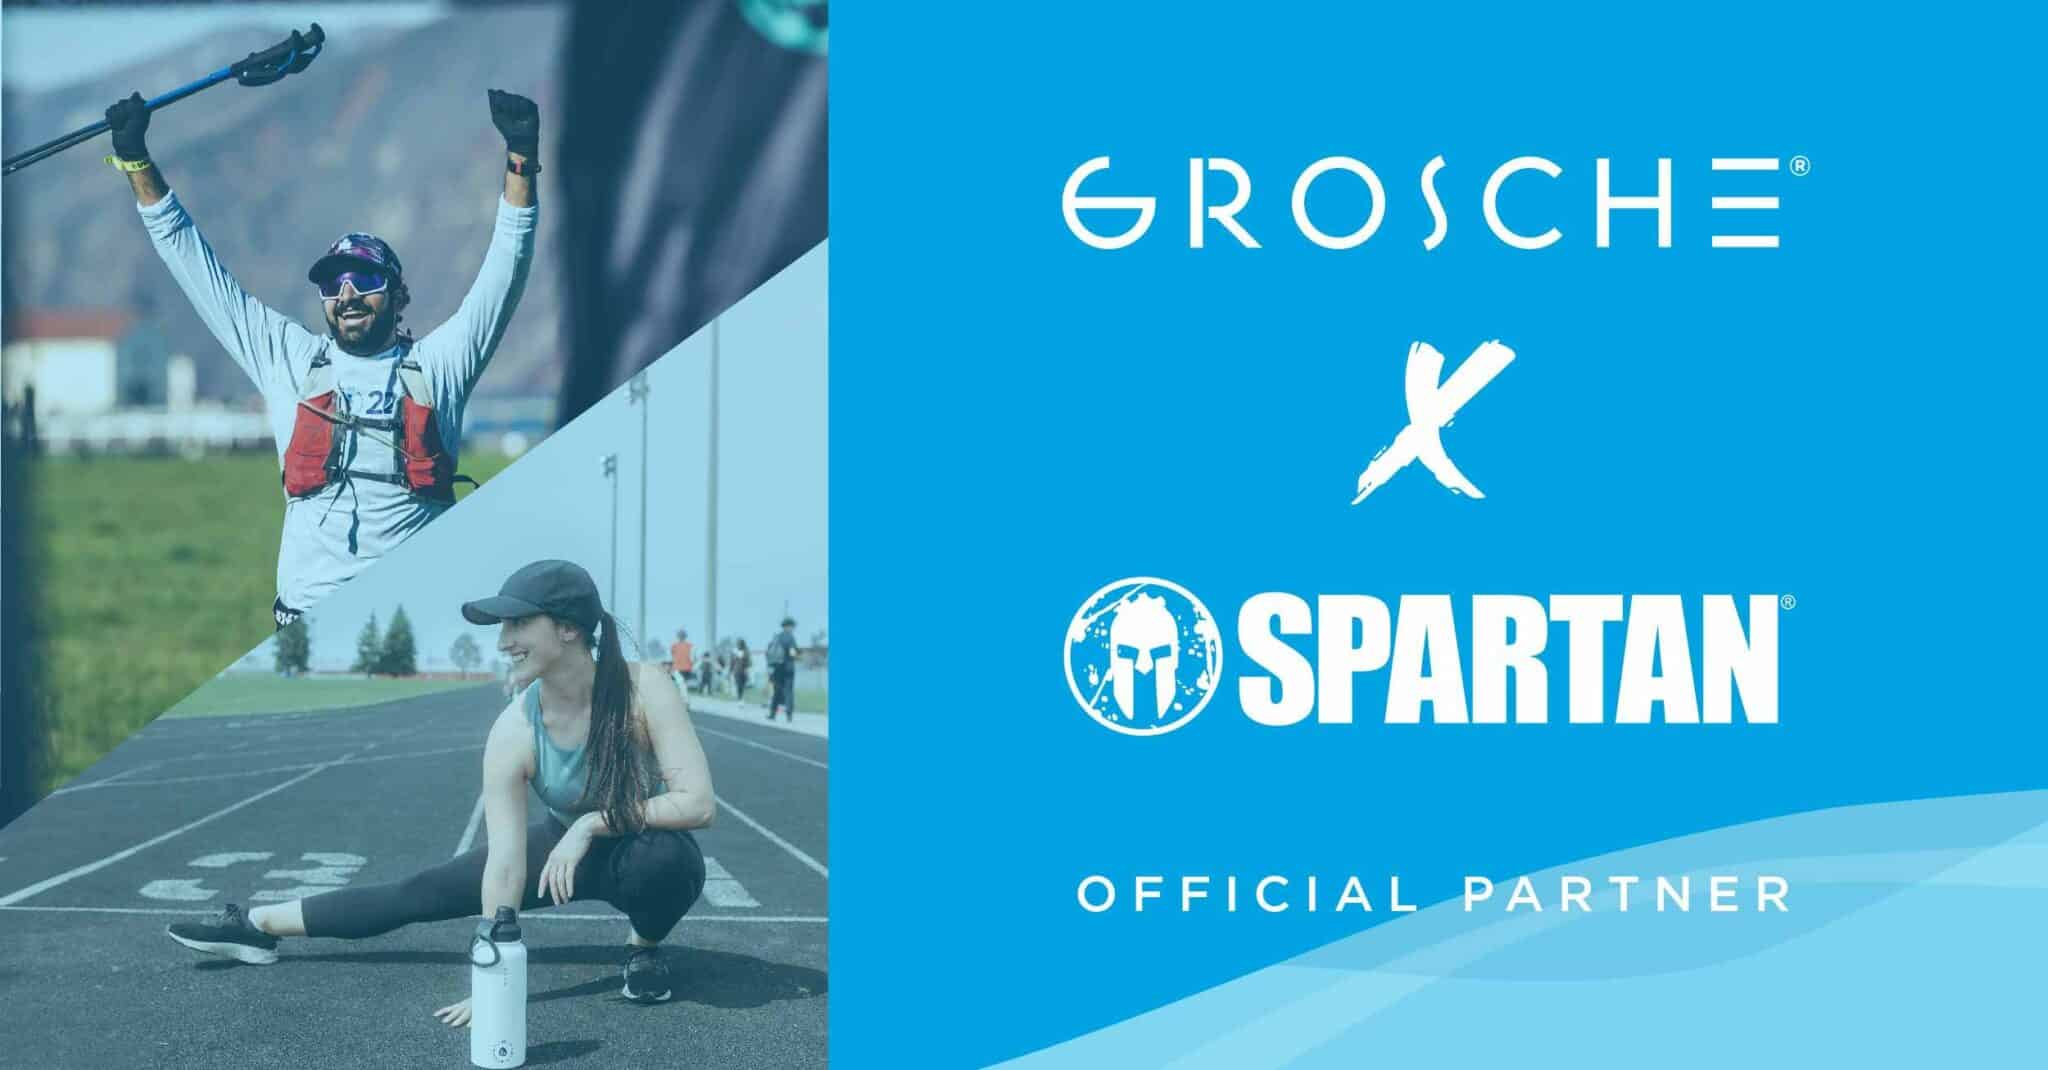 Spartan race and GROSCHE official drinkware partners. Custom Spartan water bottles